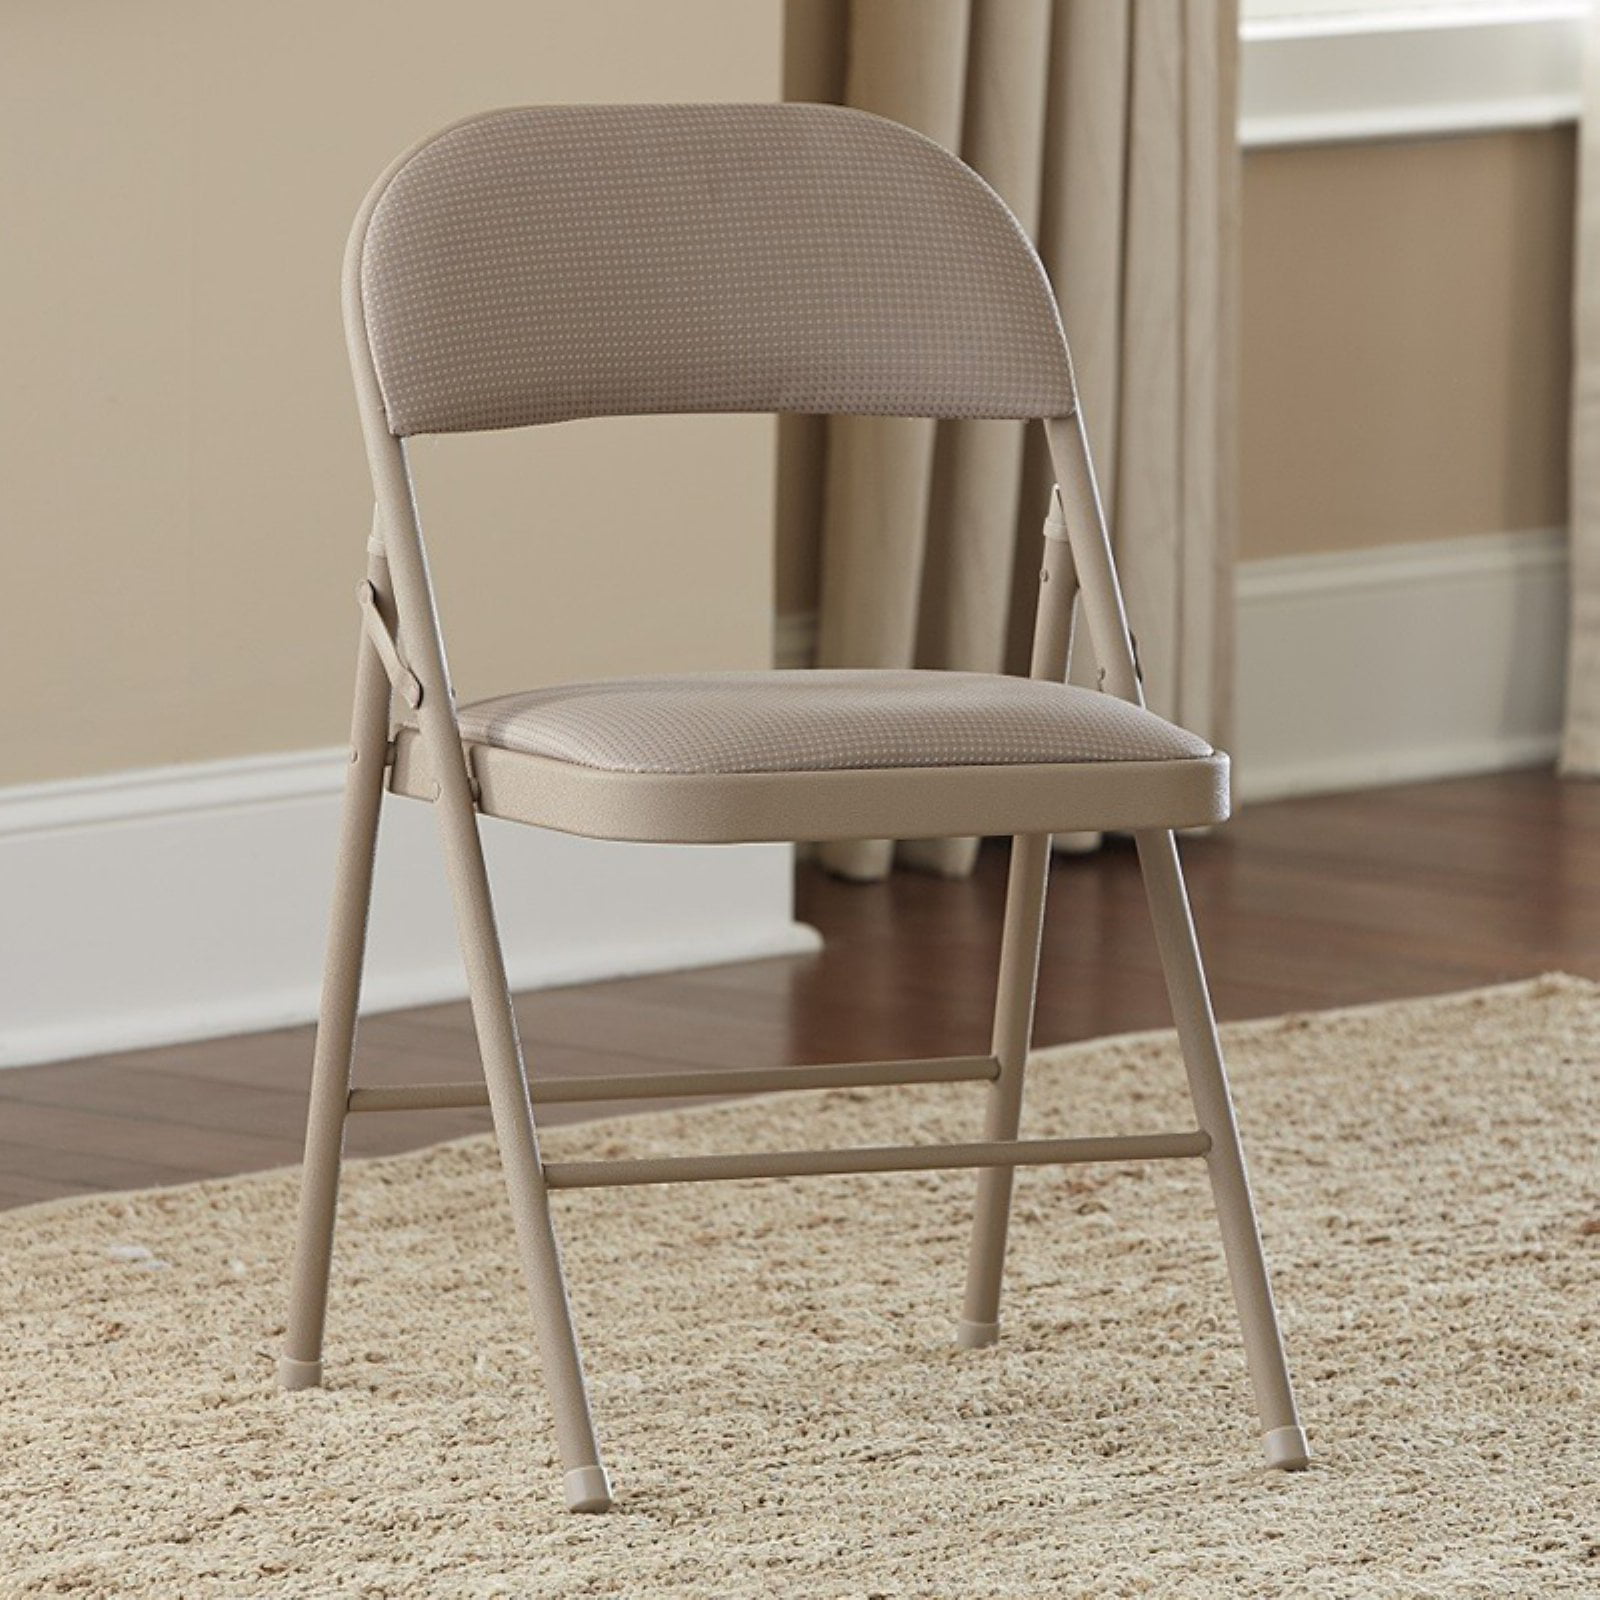 Cosco Deluxe Fabric Folding Chair, Set of 4 - Walmart.com - Walmart.com